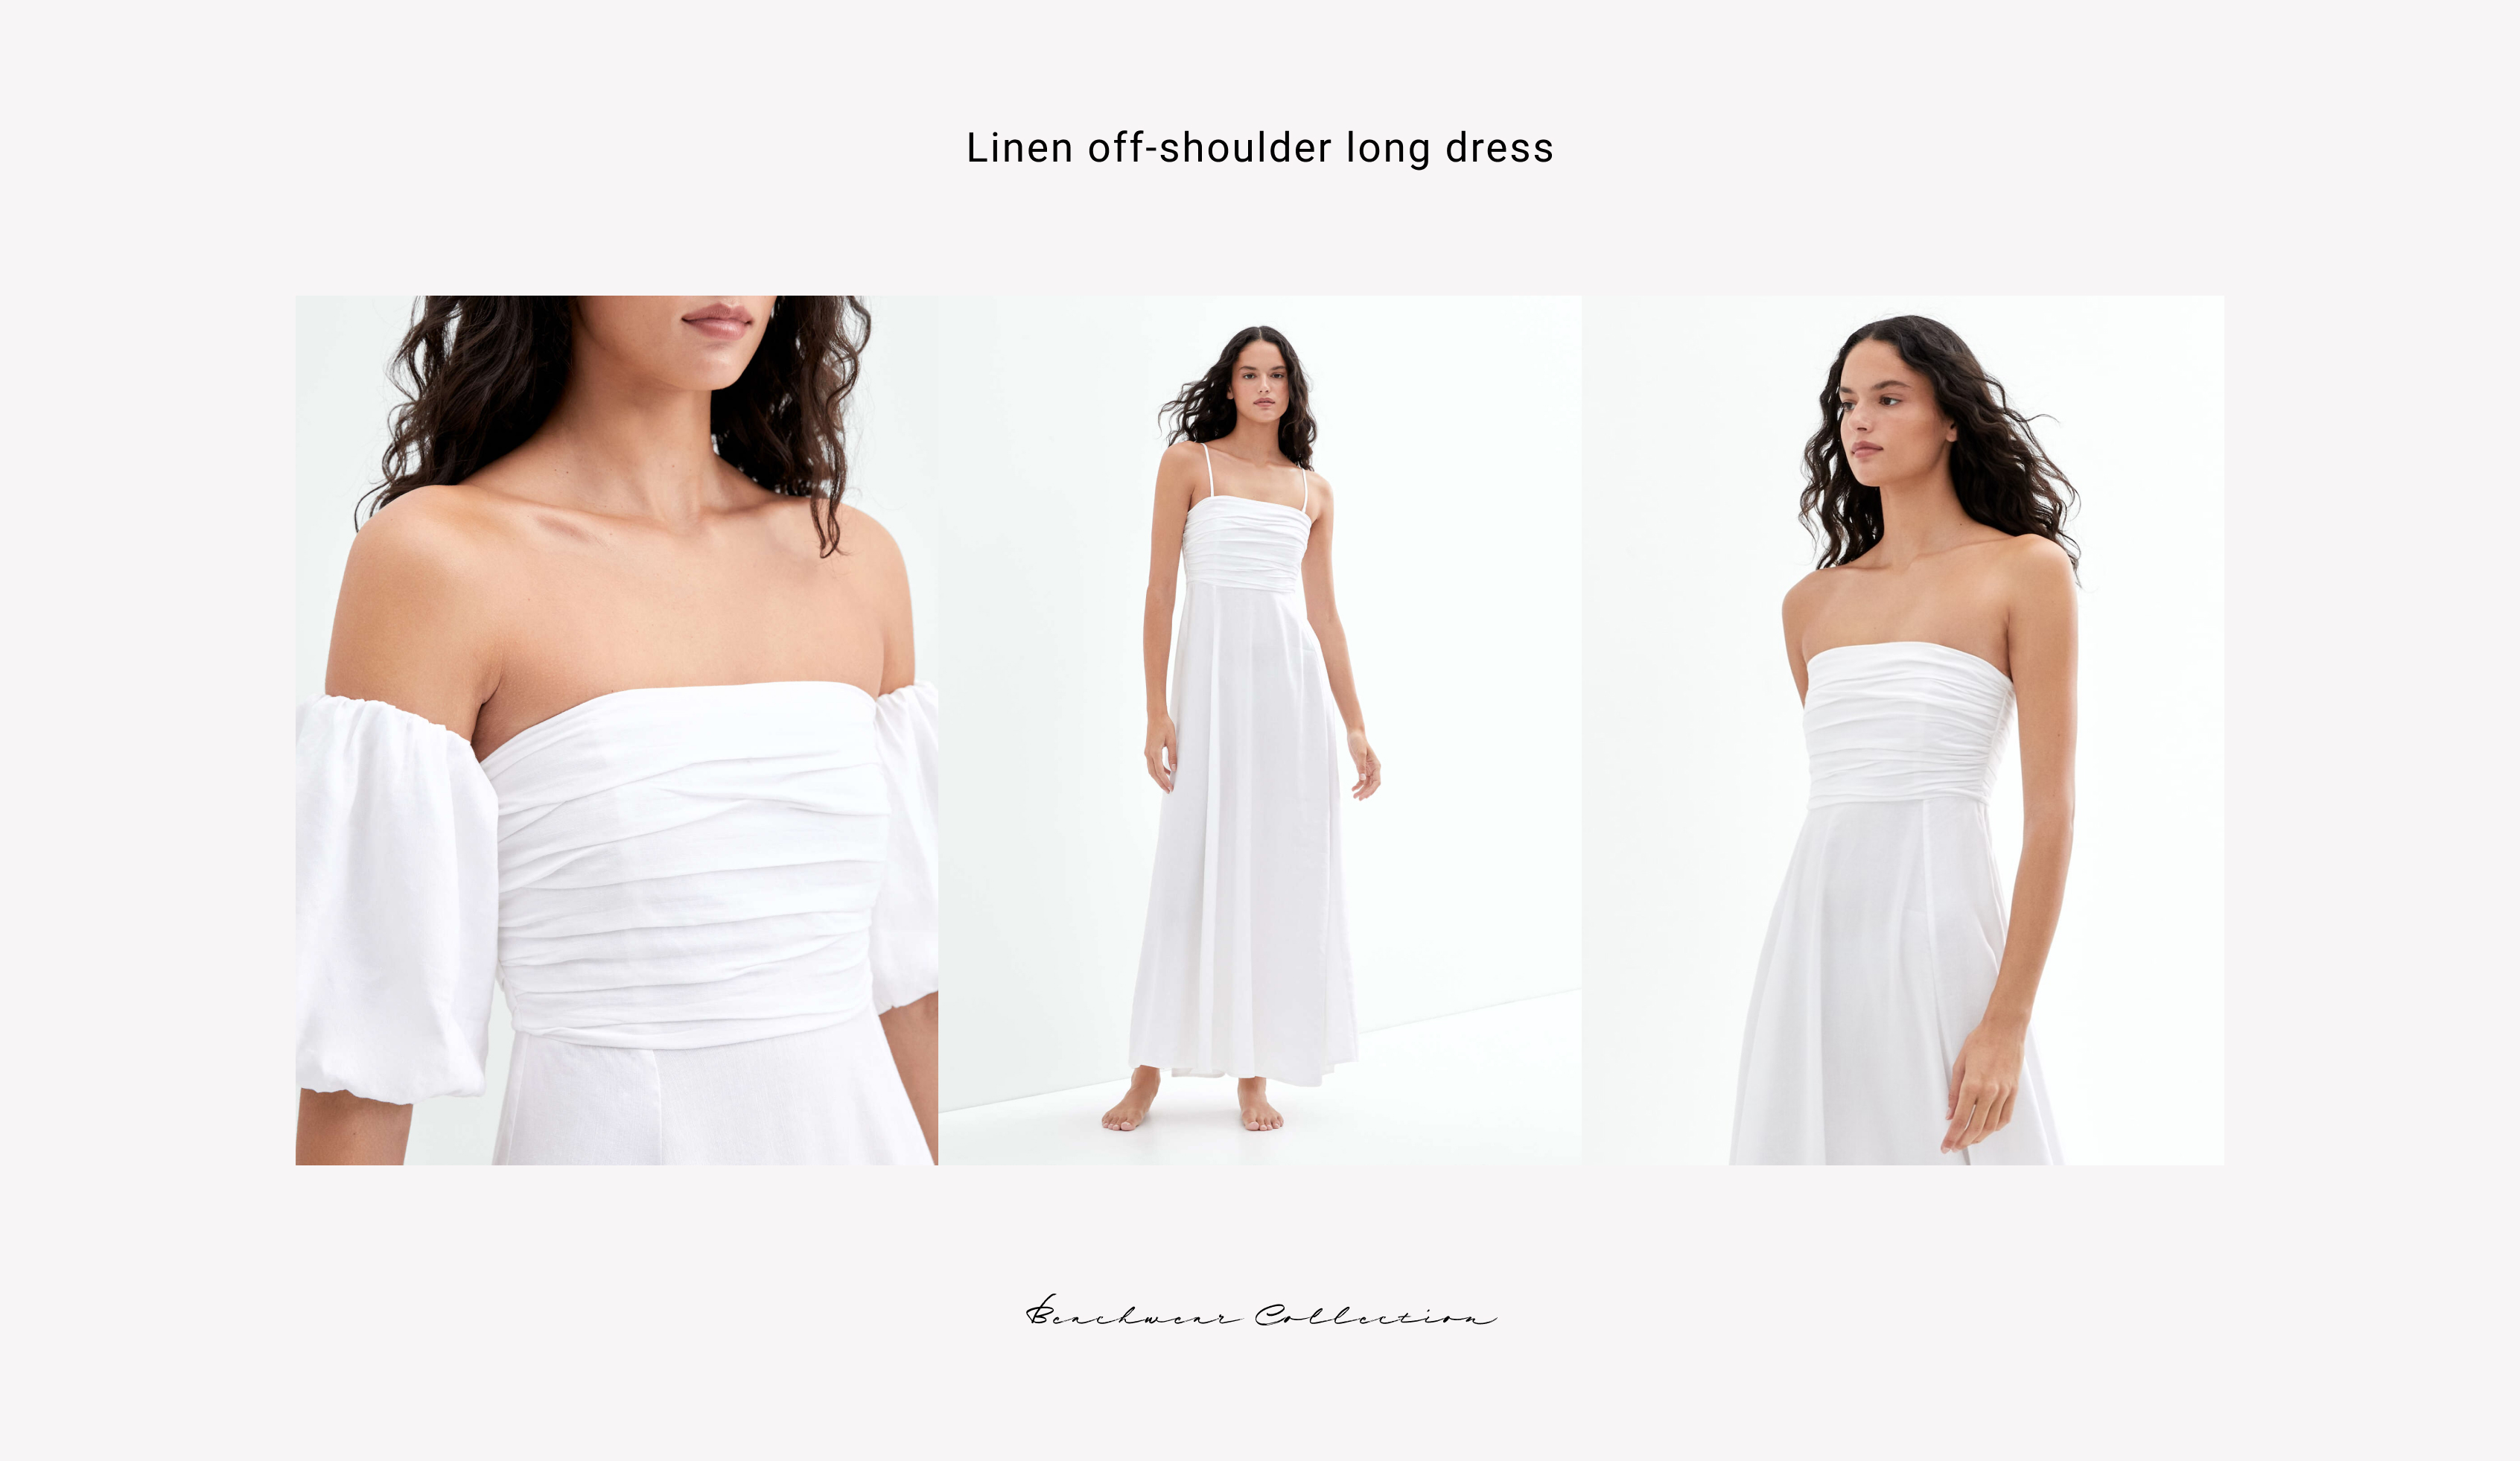 Multi-way linen off-shoulder long dress